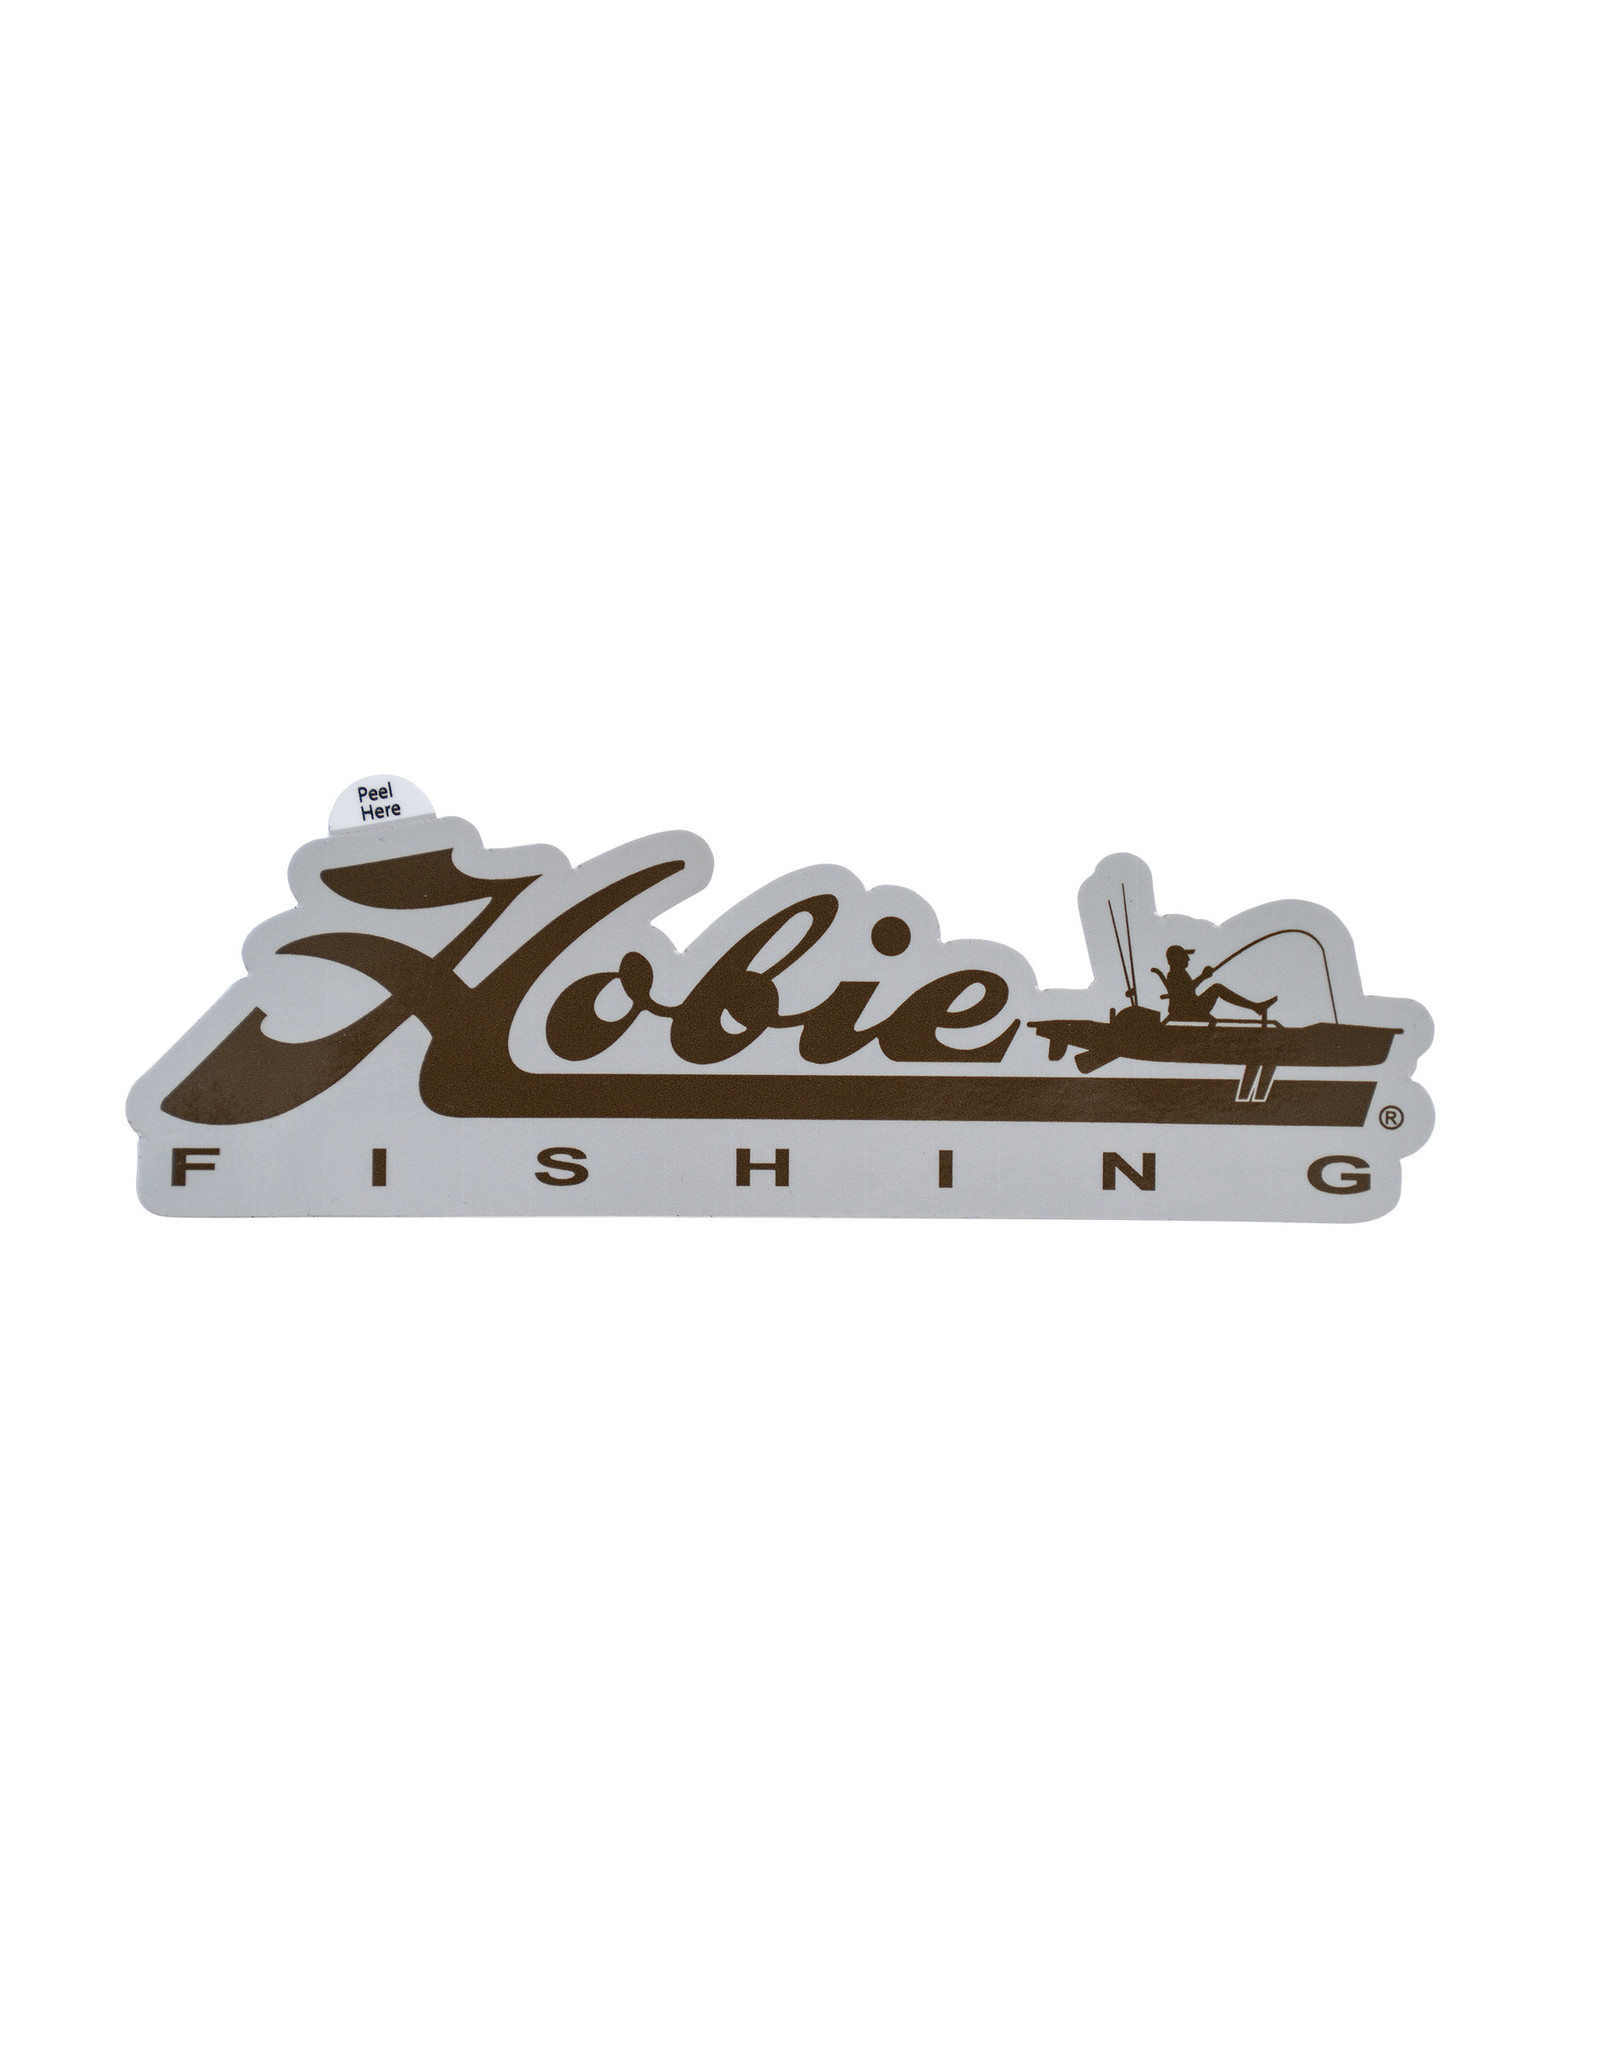 Hobie Hobie "Kayak Fishing" Decal - Matte Olive - X-24